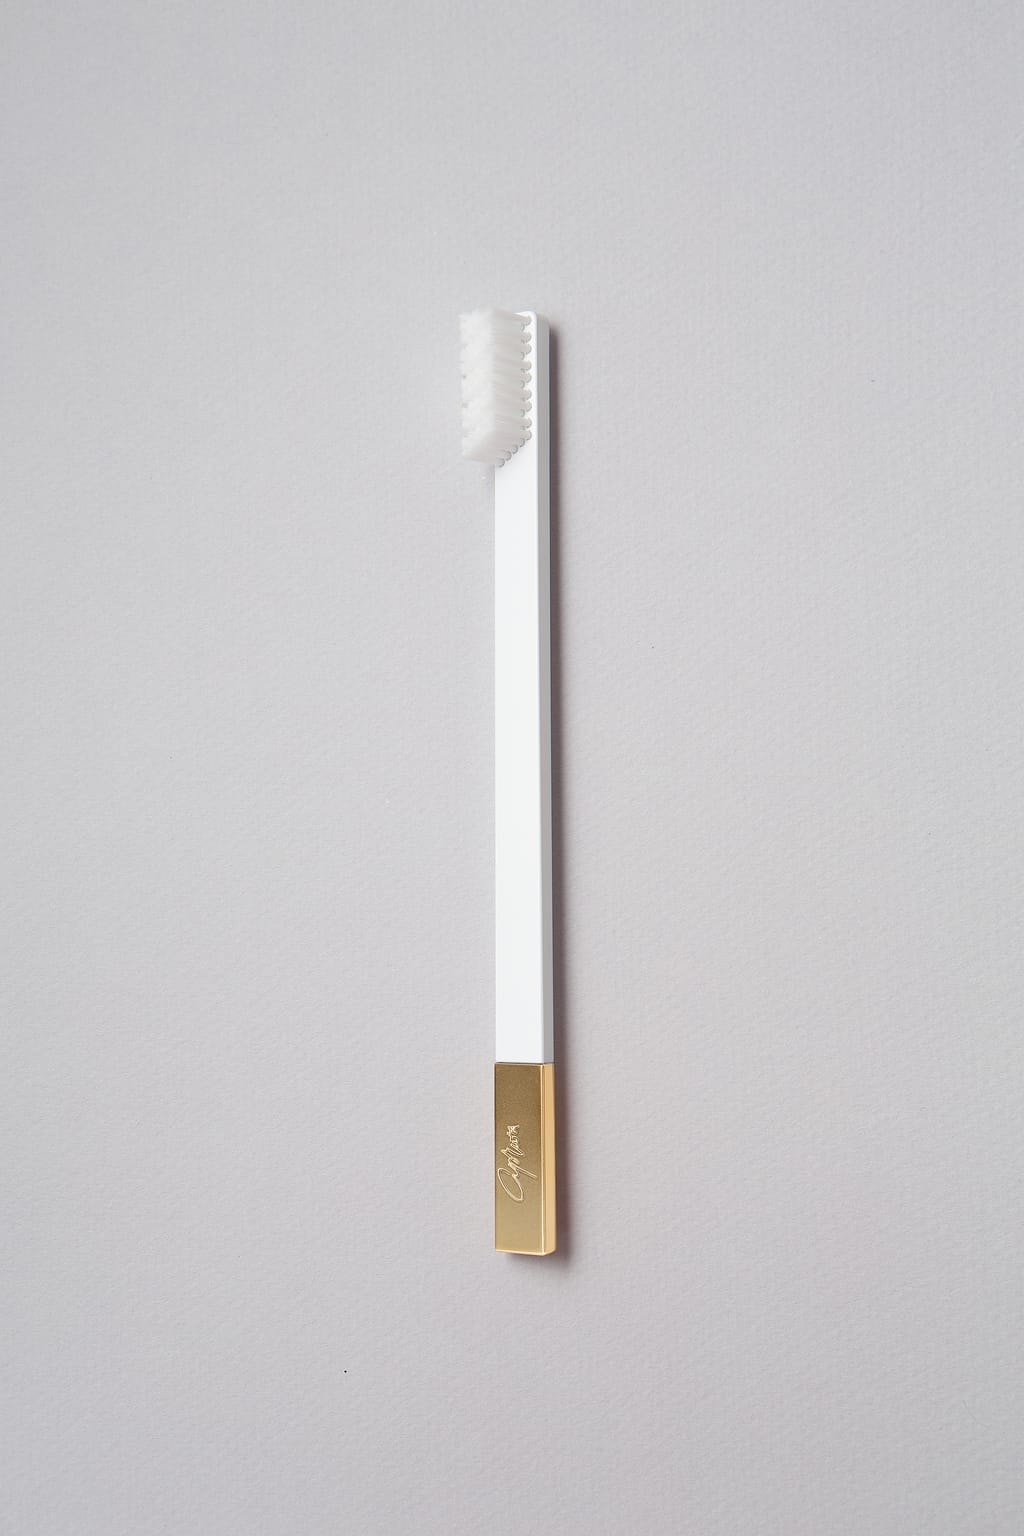 White Gold designer toothbrush SLIM by Apriori